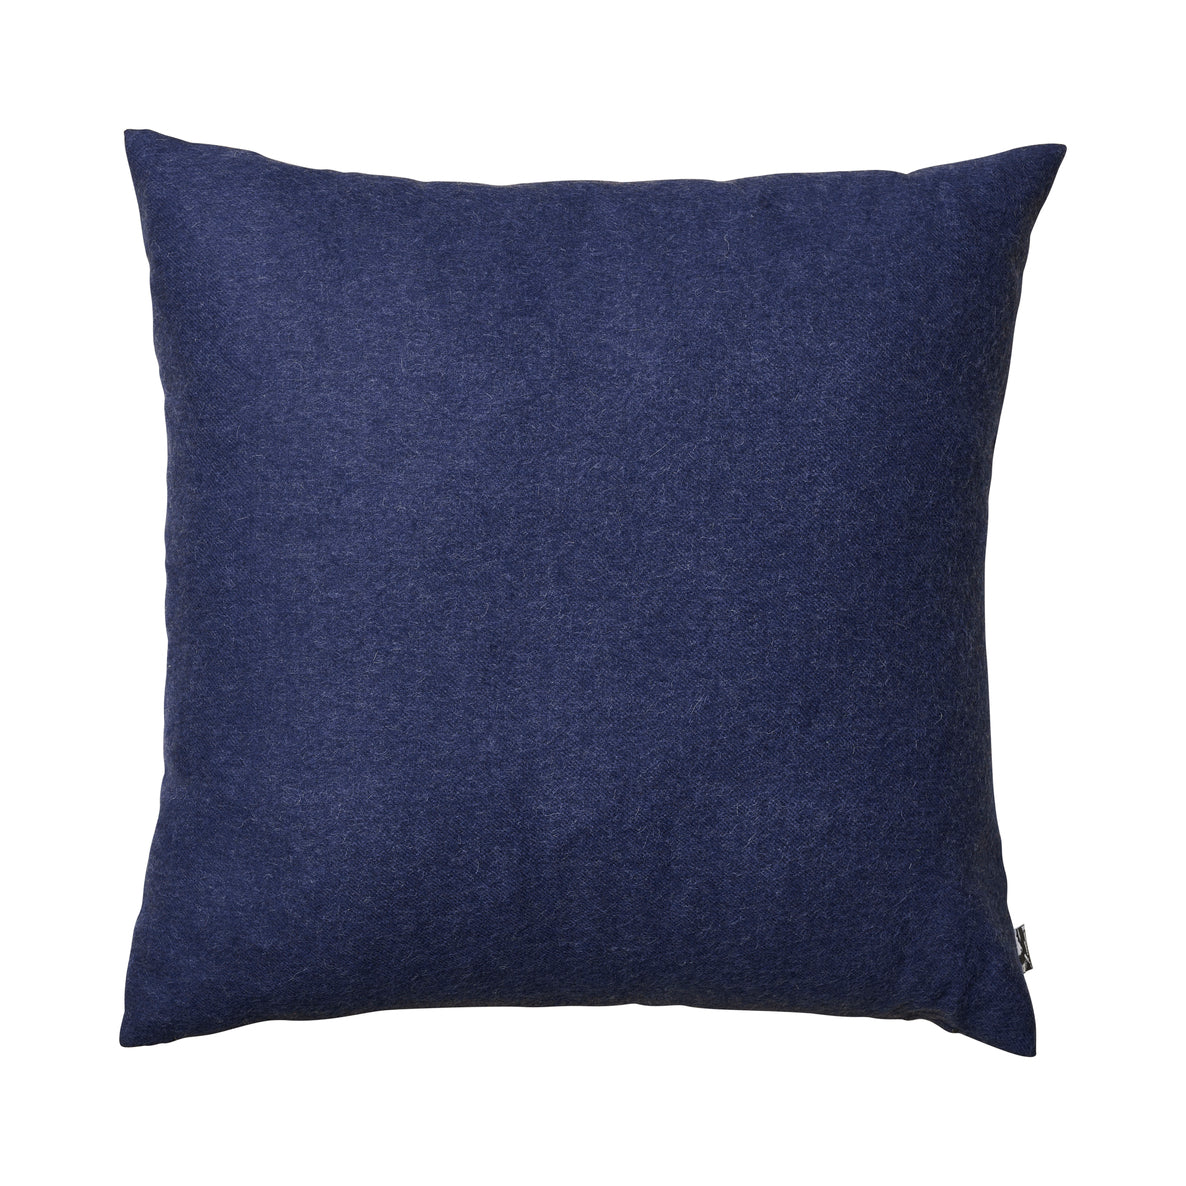 Cusco Pillow - 100% Baby Alpaca Wool